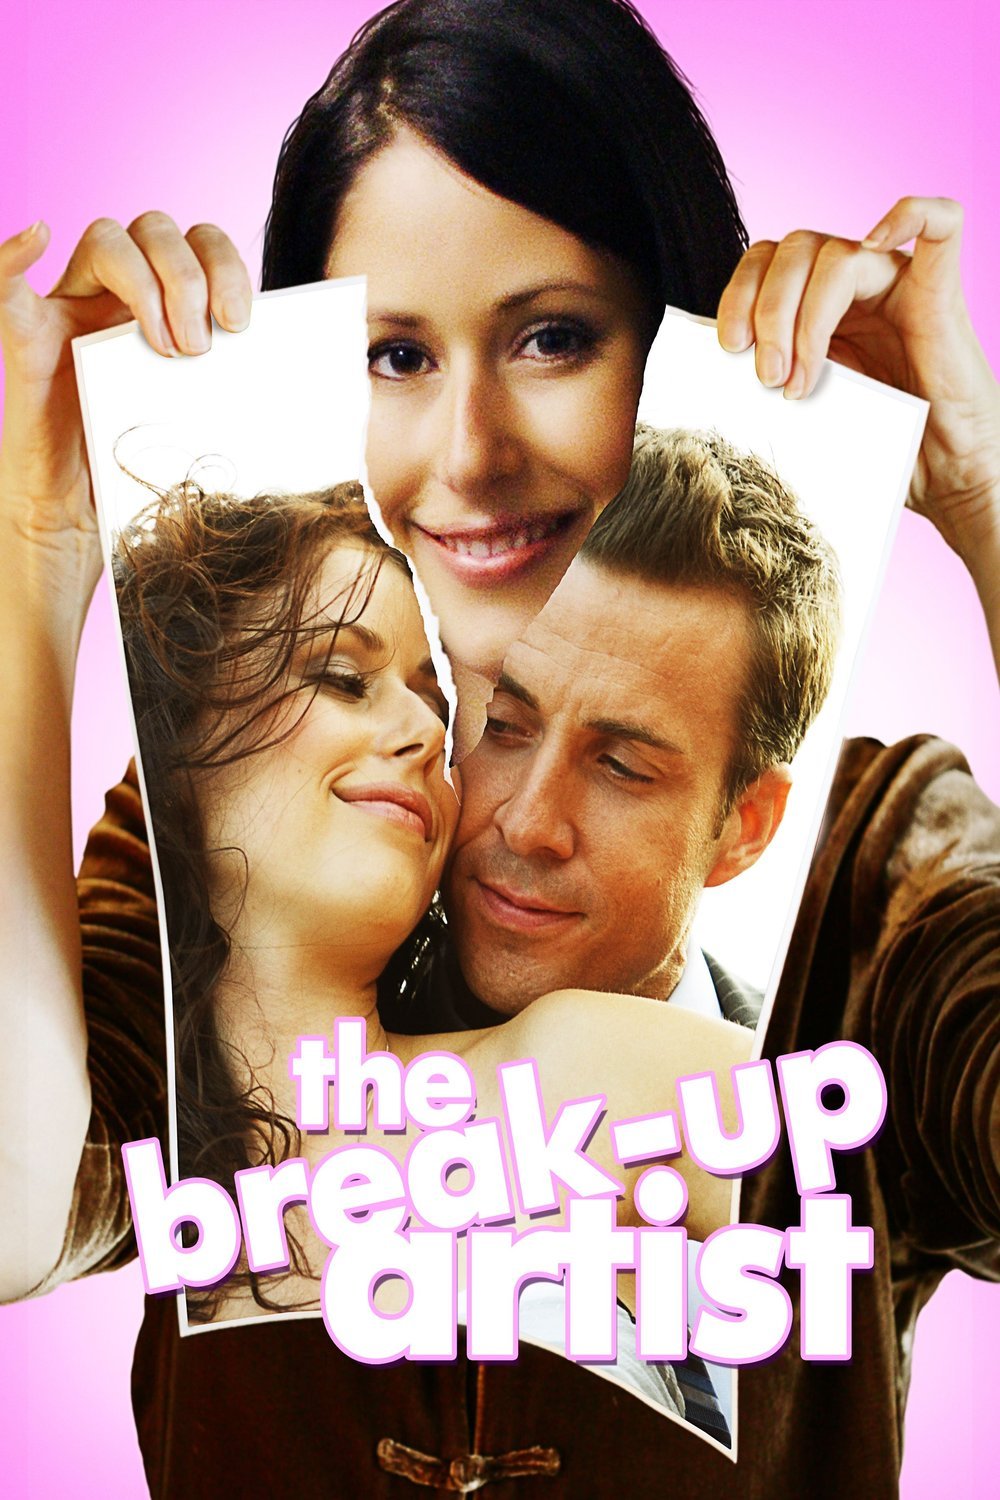 L'affiche du film The Break-Up Artist